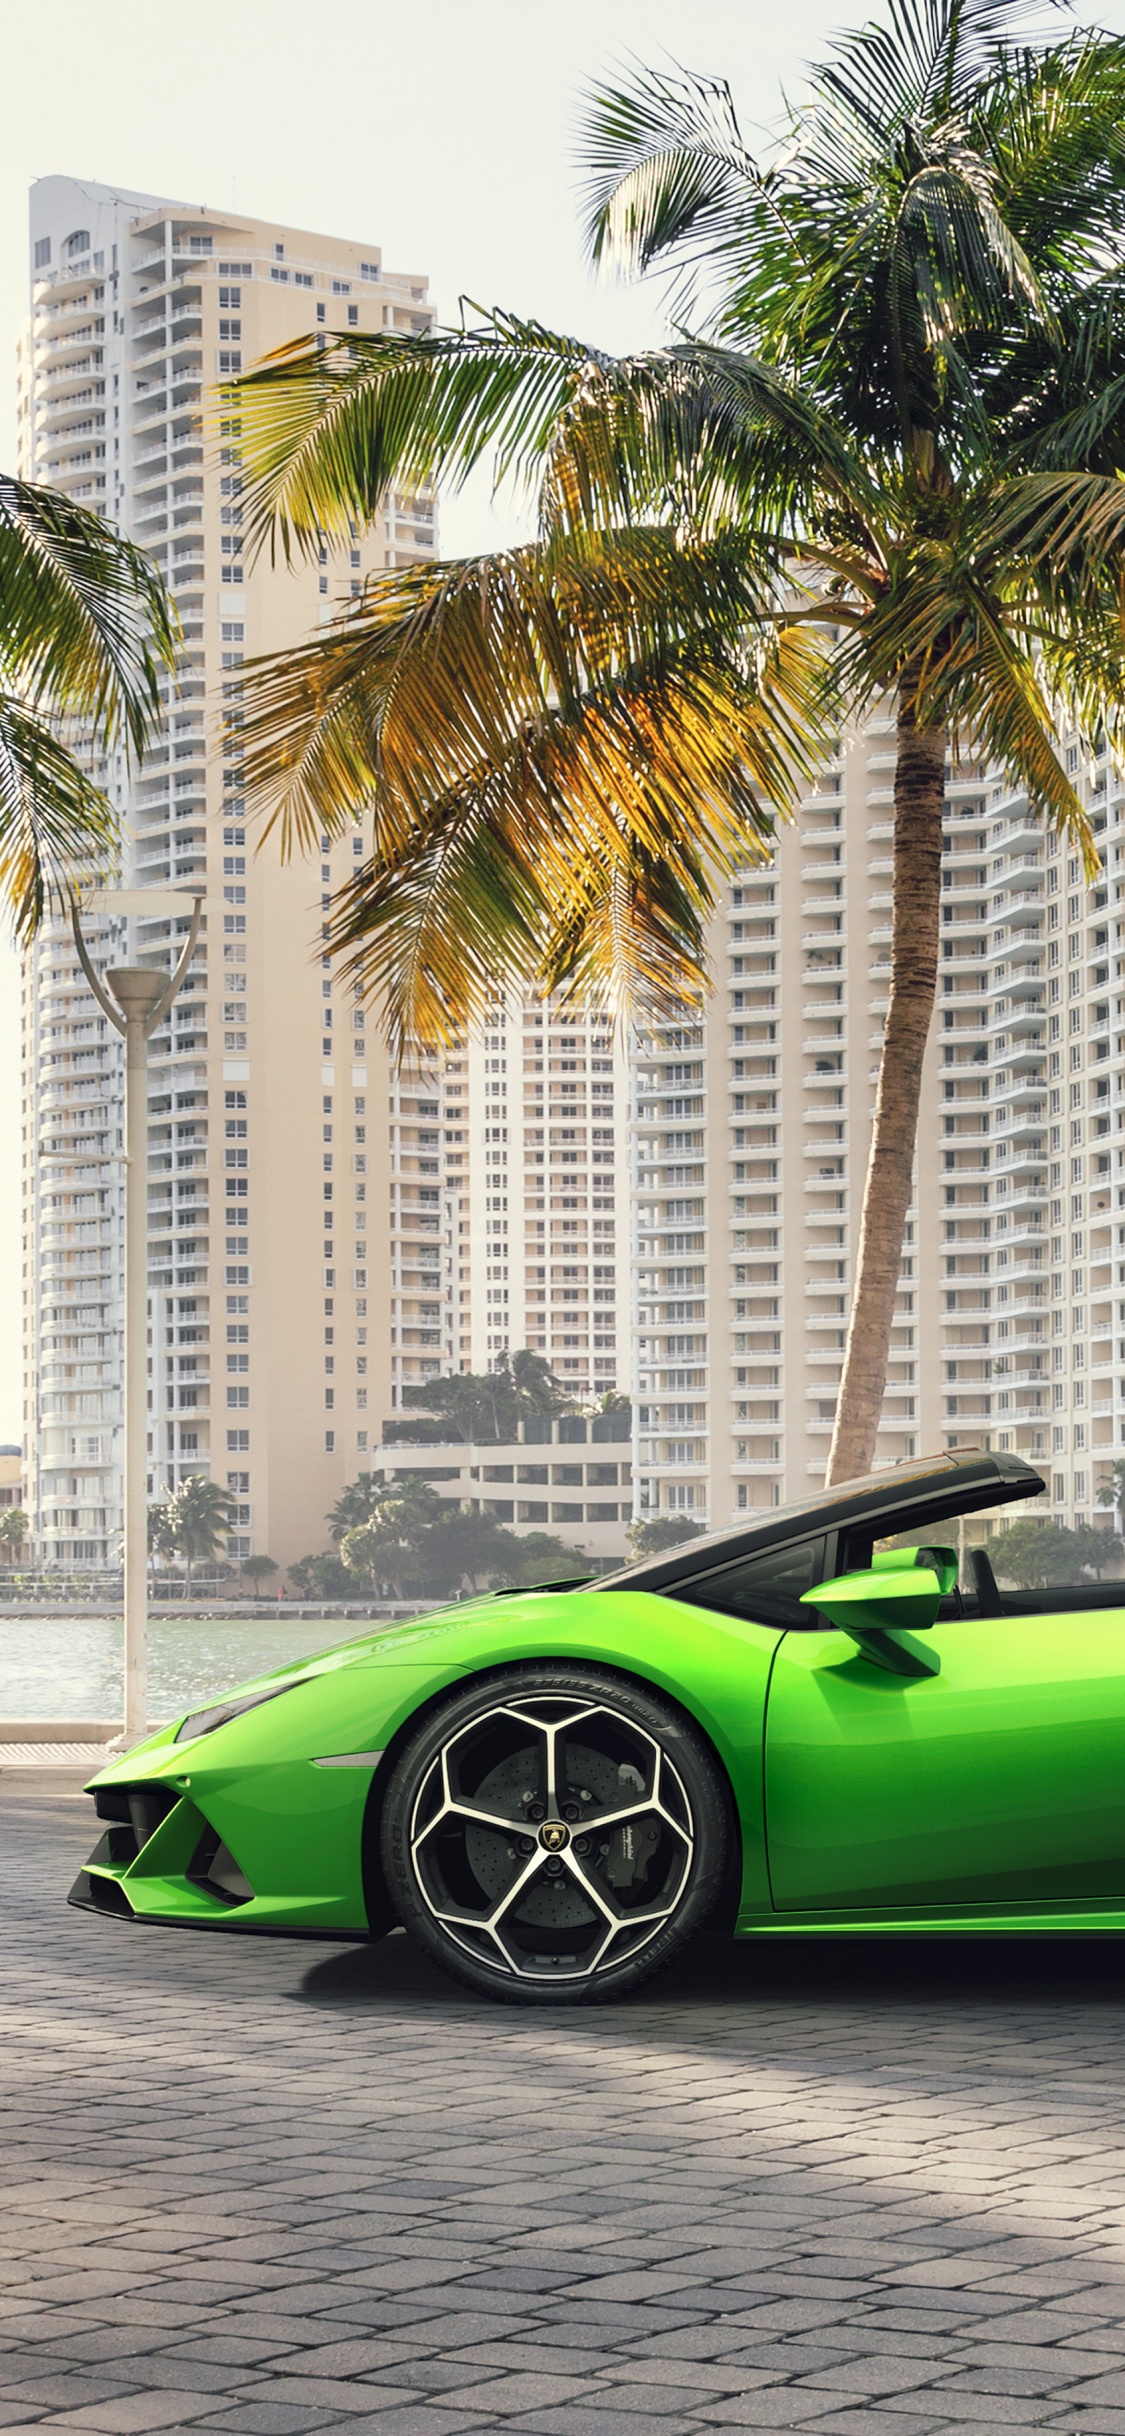 Green Ferrari Sports Car on Road During Daytime. Wallpaper in 1125x2436 Resolution